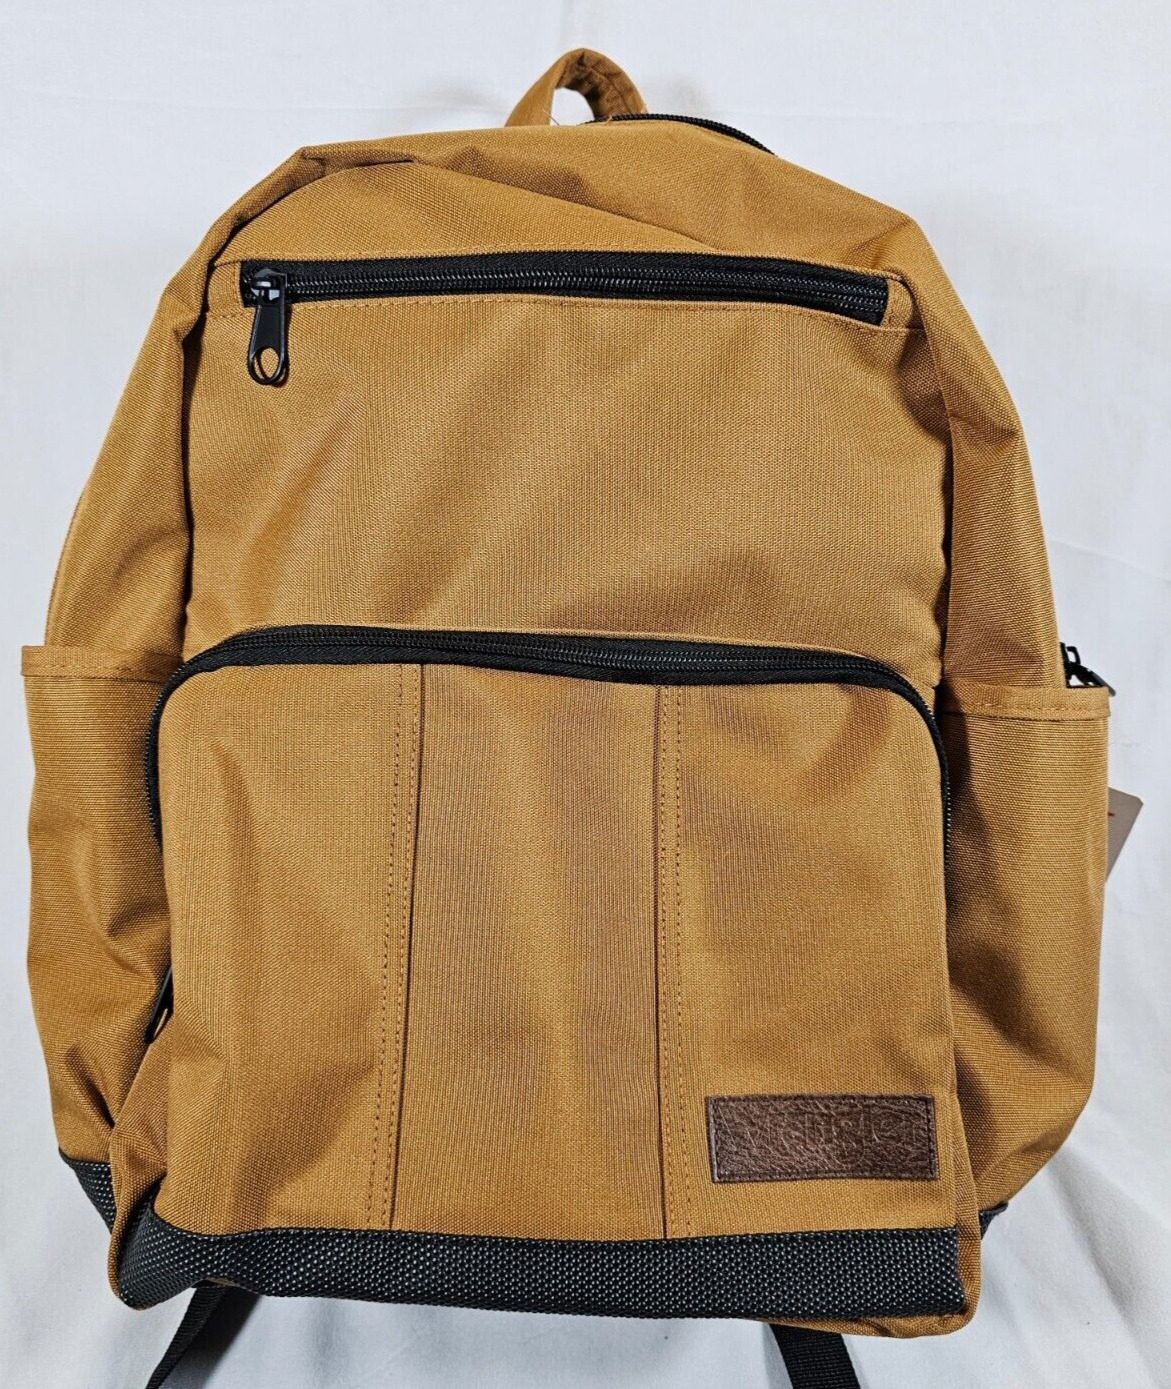 Wrangler Industry Backpack - Classic Logo, Water Resistant, Padded Laptop Sleeve